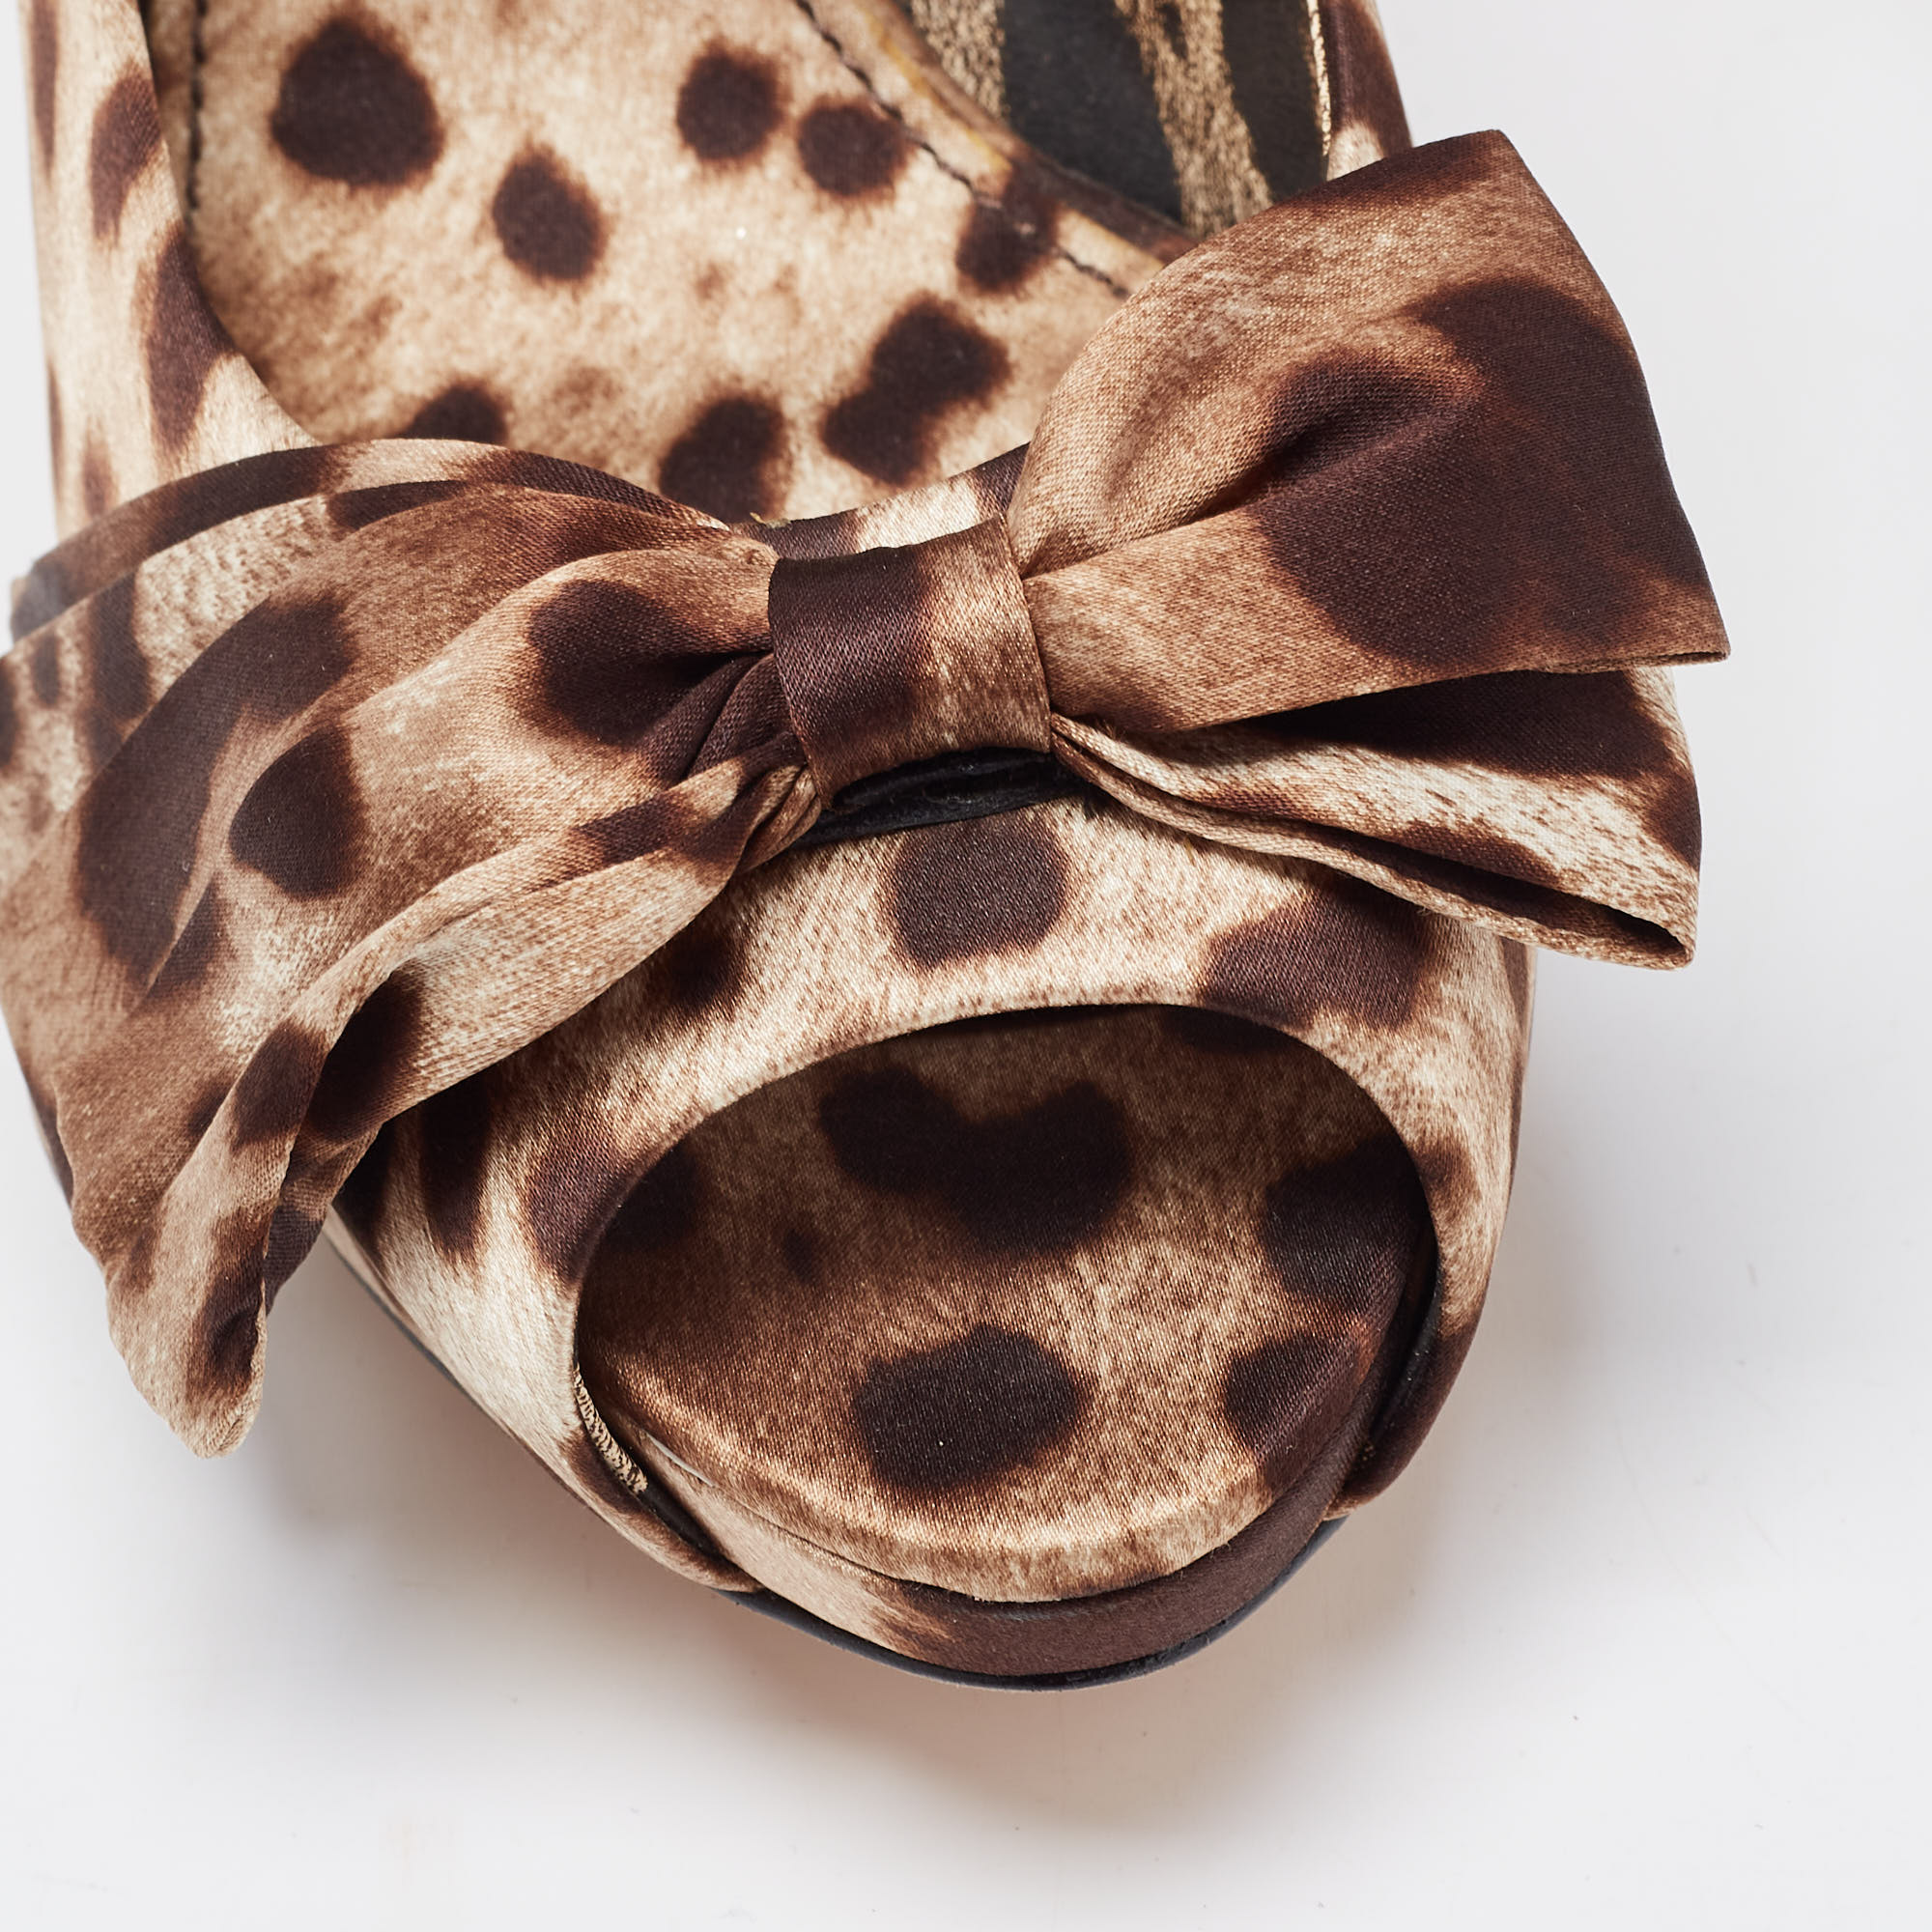 Dolce & Gabbana Brown/Beige Leopard Print Satin Bow Peep Toe Pumps Size 41